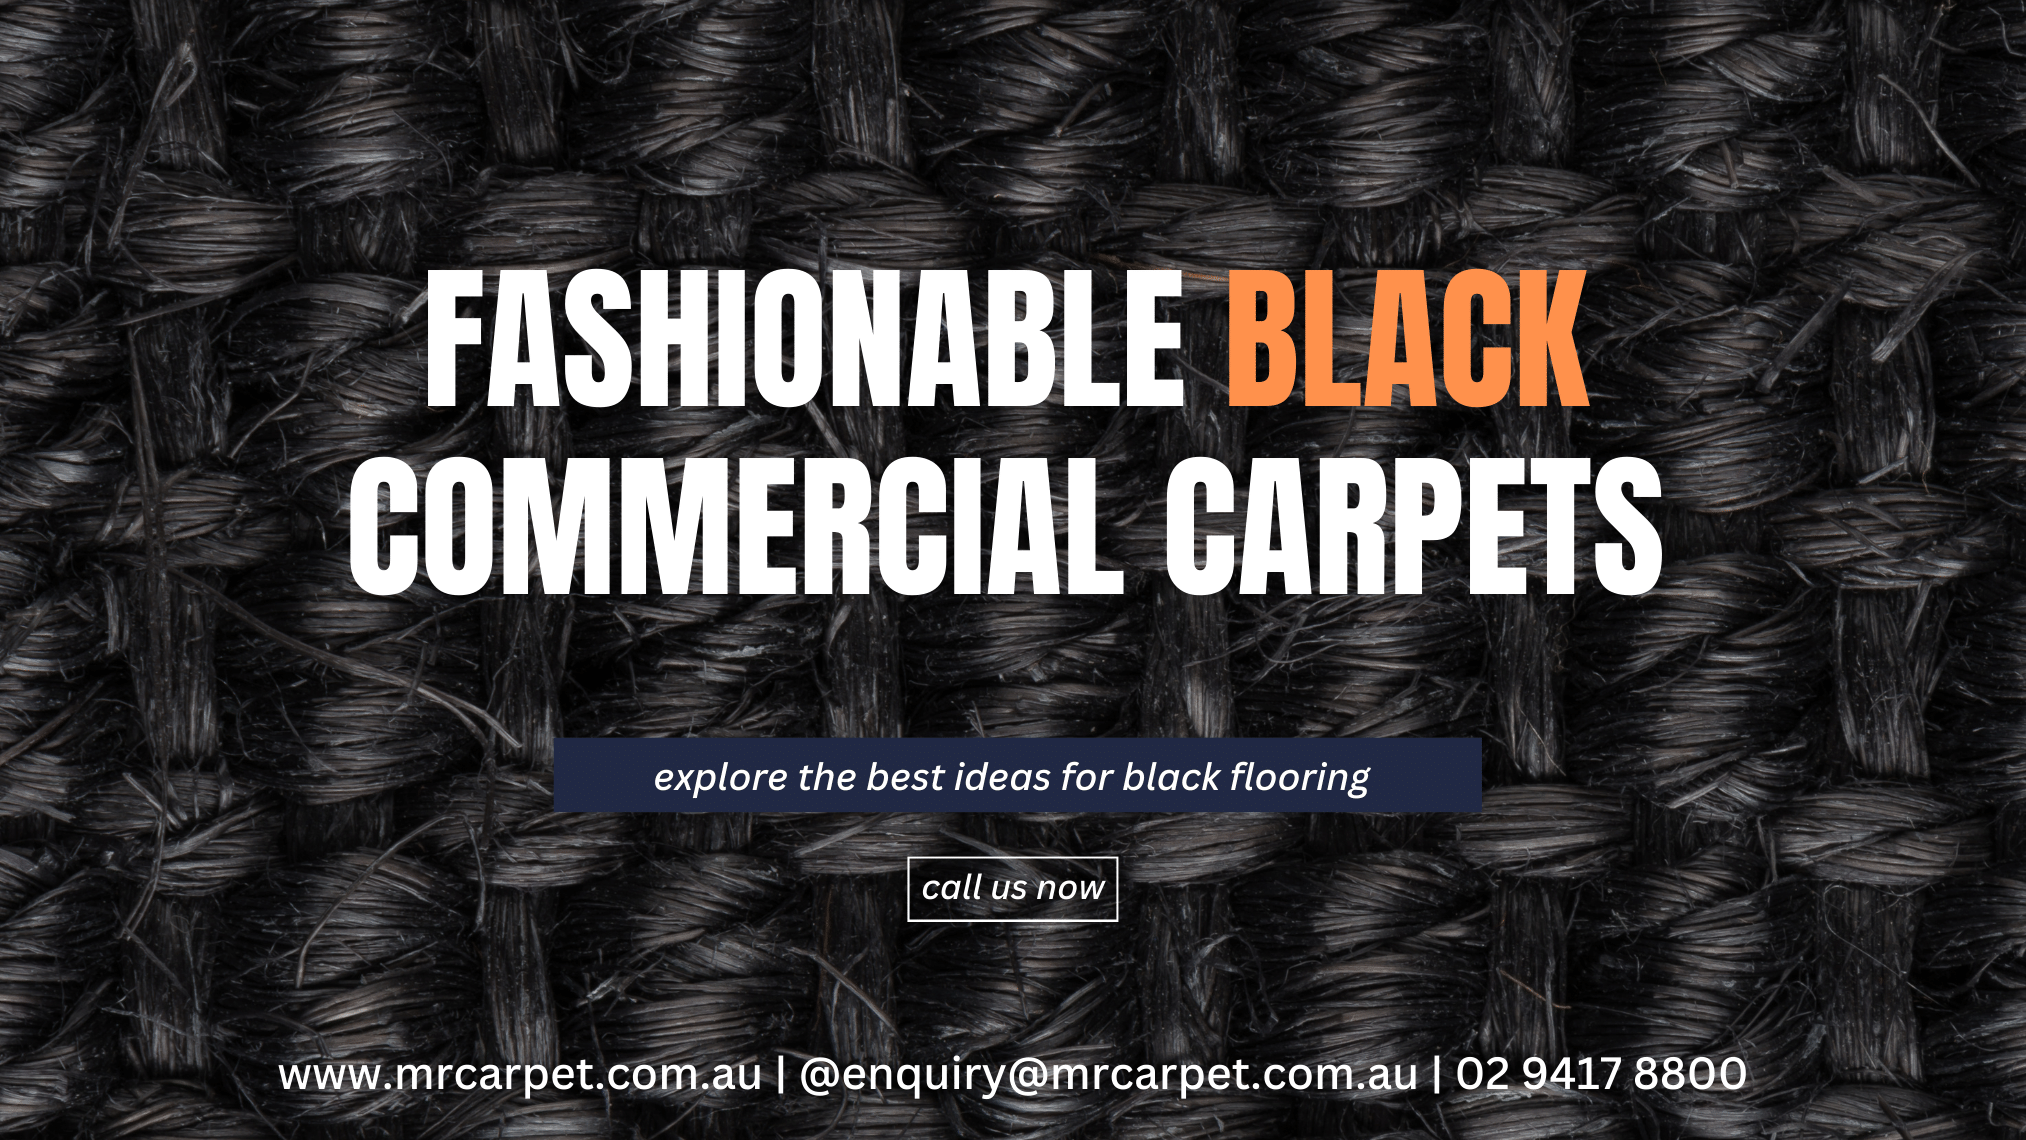 Fashionable black commercial carpeting - Mr Carpet